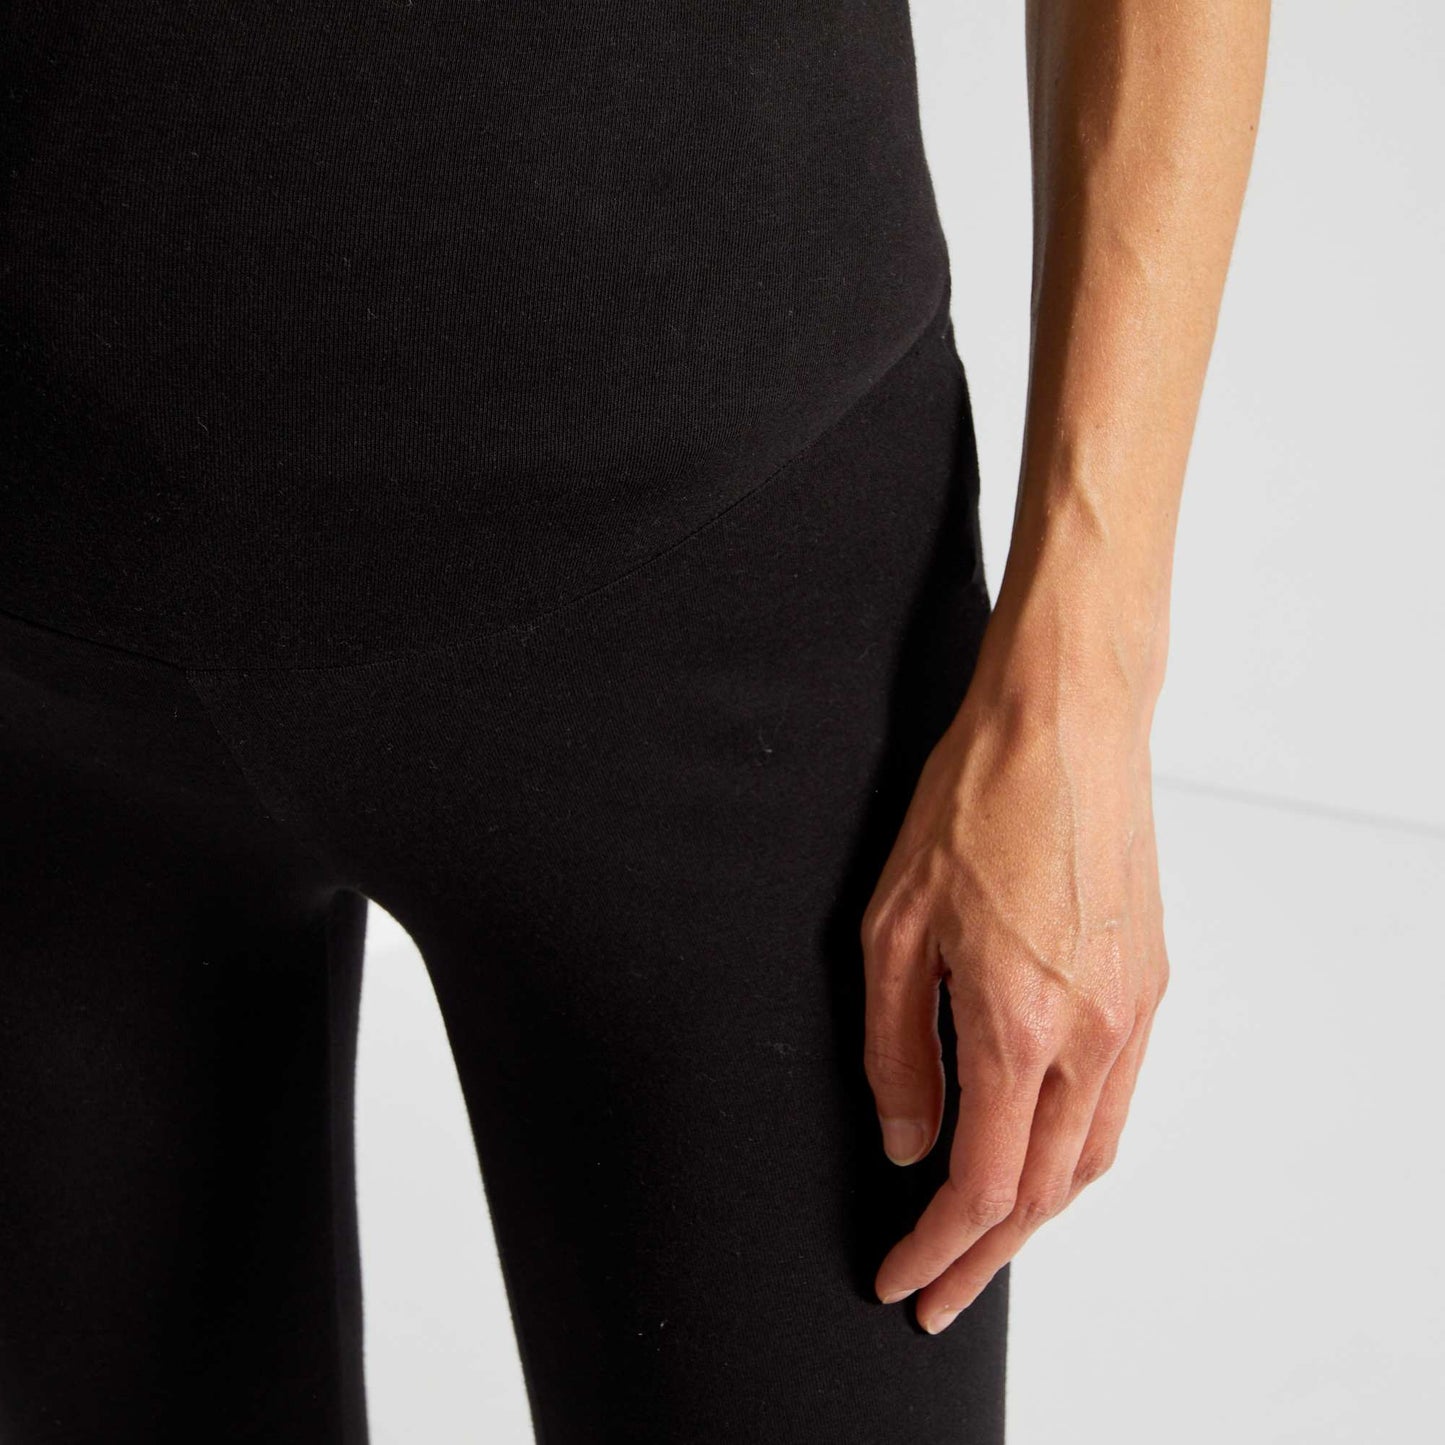 Stretch knit eco-design maternity leggings black